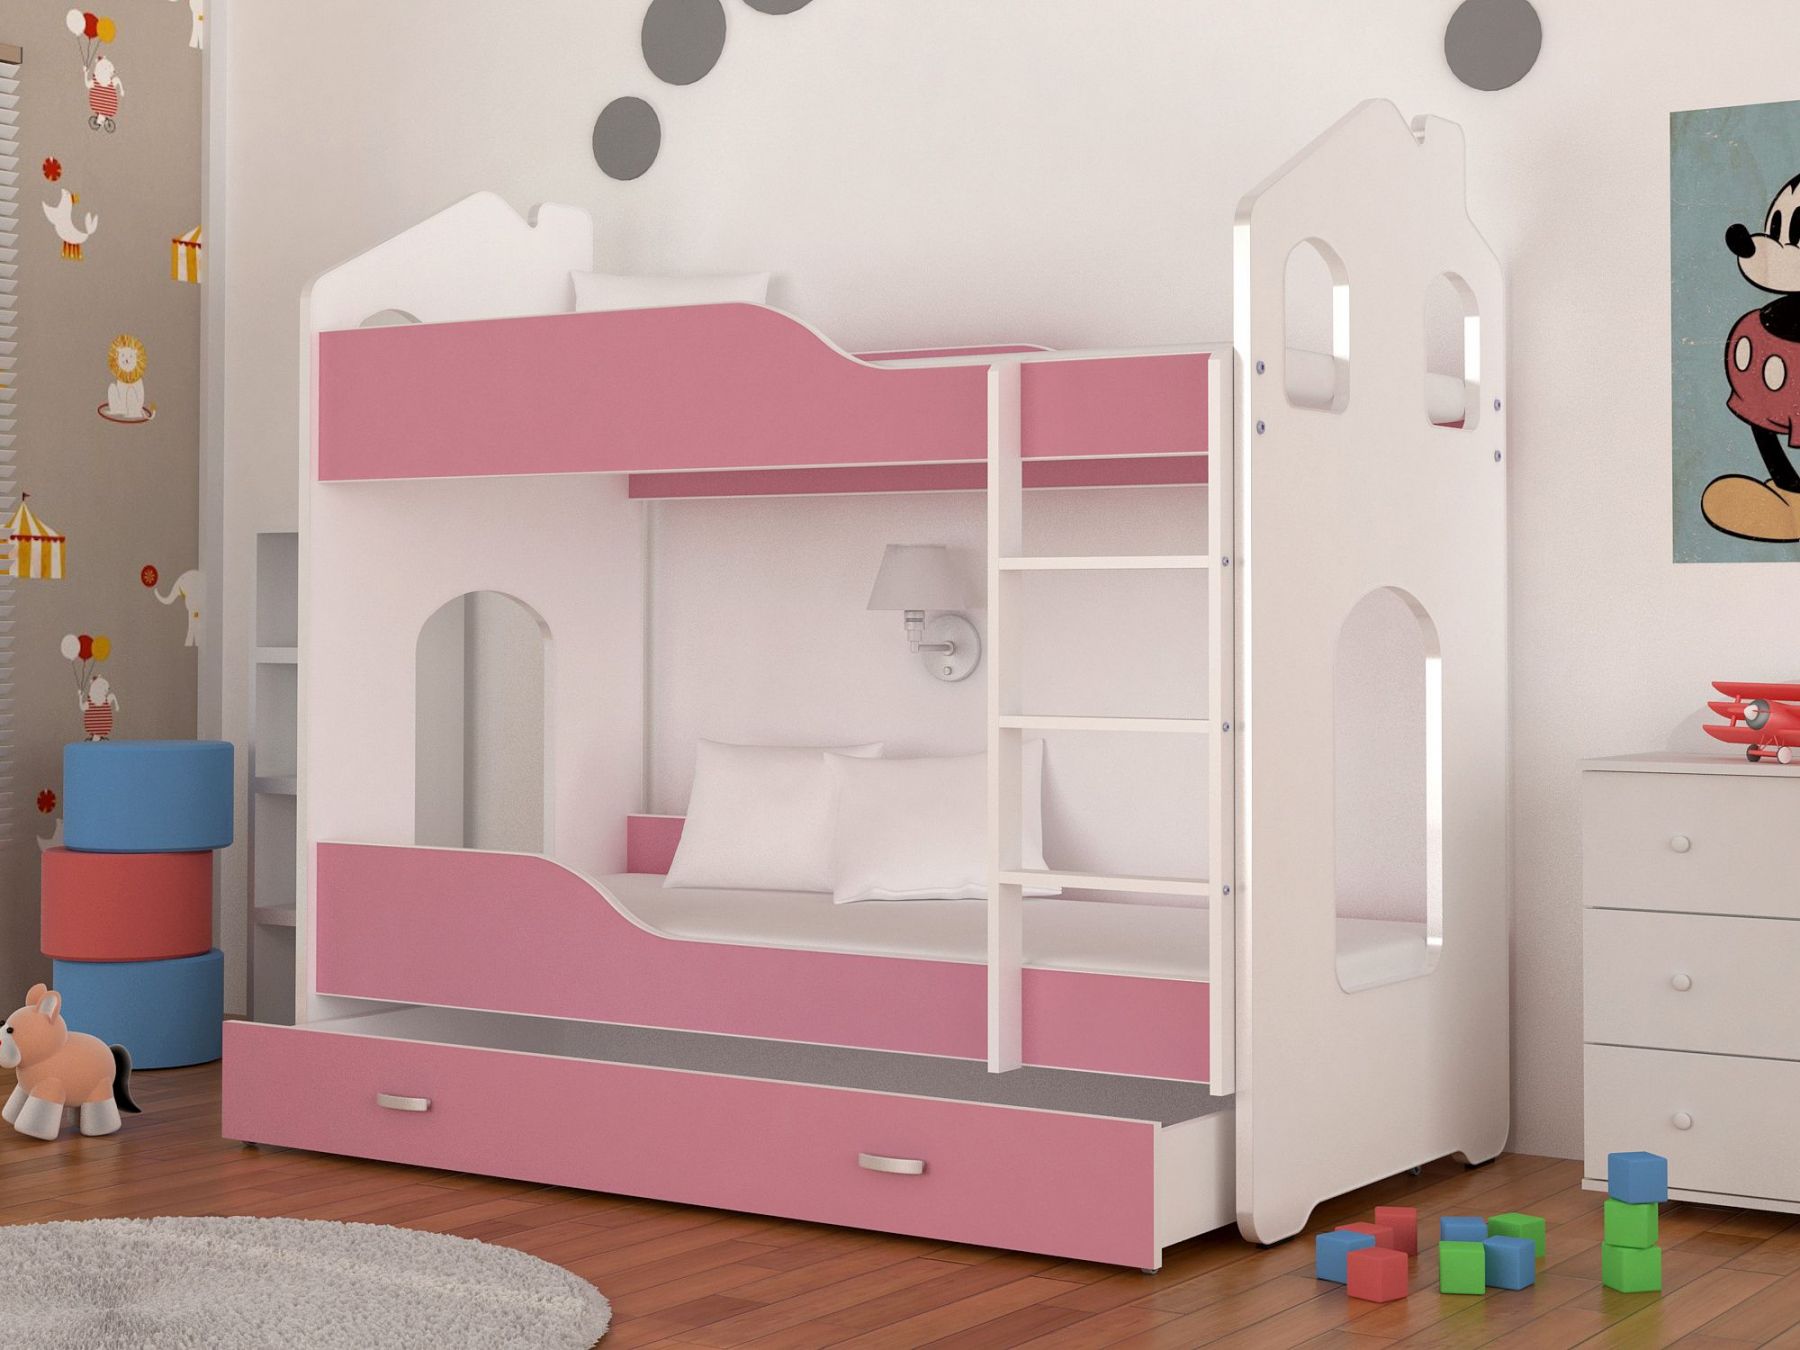 Dětská patrová postel PATRIK 2 Domek + matrace + rošt ZDARMA, 160x80, bílá/růžová - Expedo s.r.o.